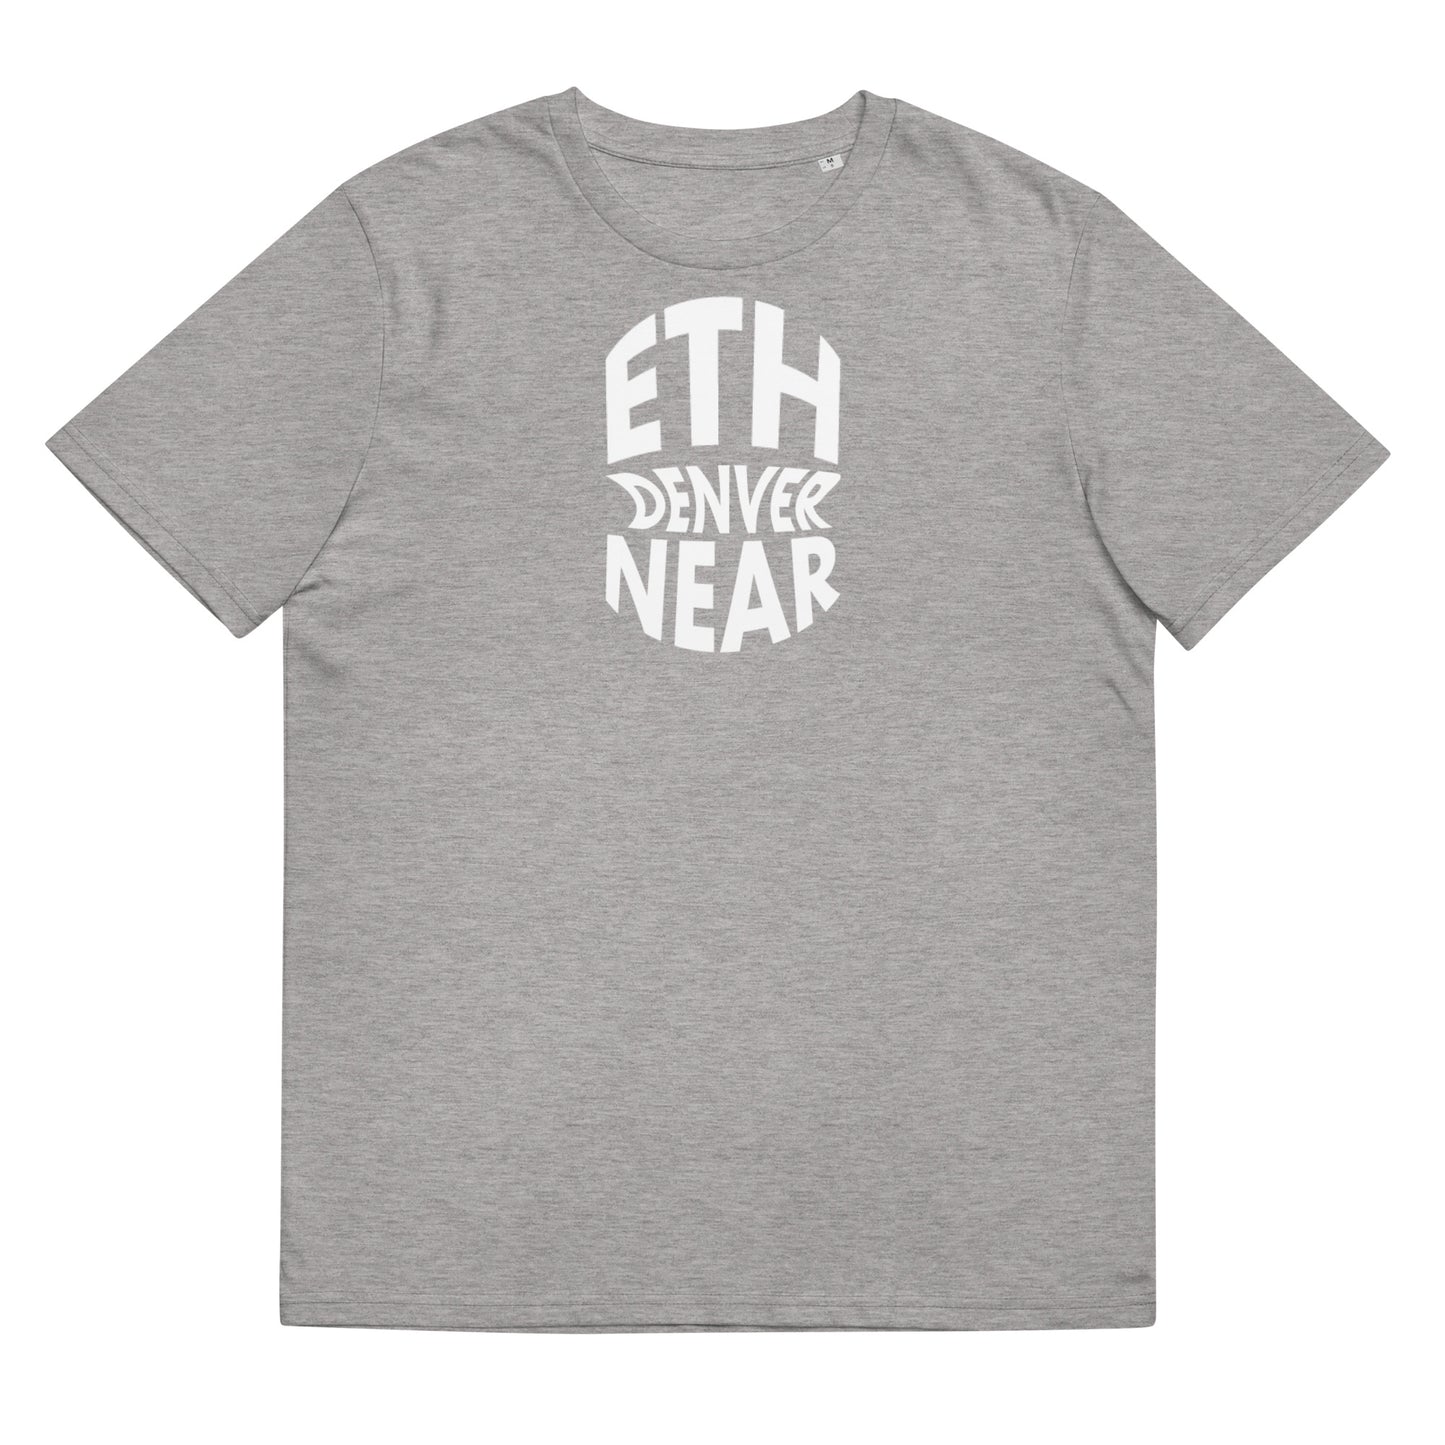 ETH Denver & NEAR Classic Logo T-Shirt